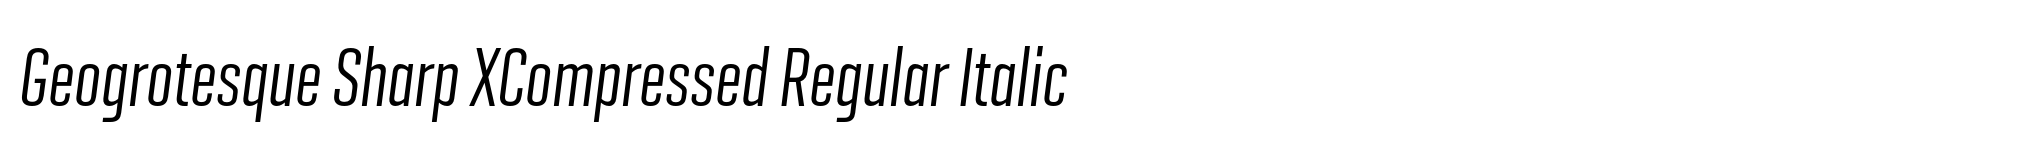 Geogrotesque Sharp XCompressed Regular Italic image